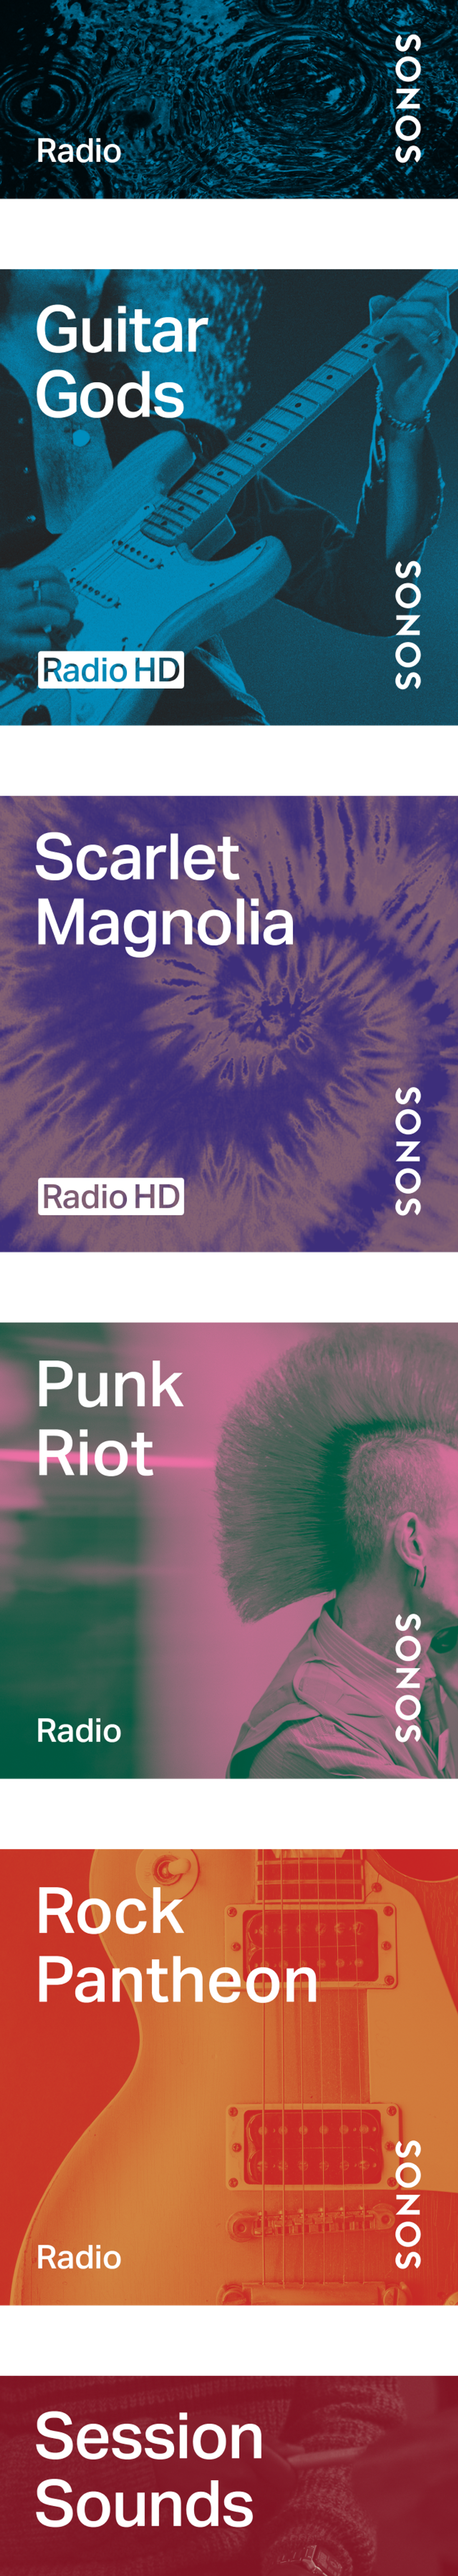 Sonos Radio-stations